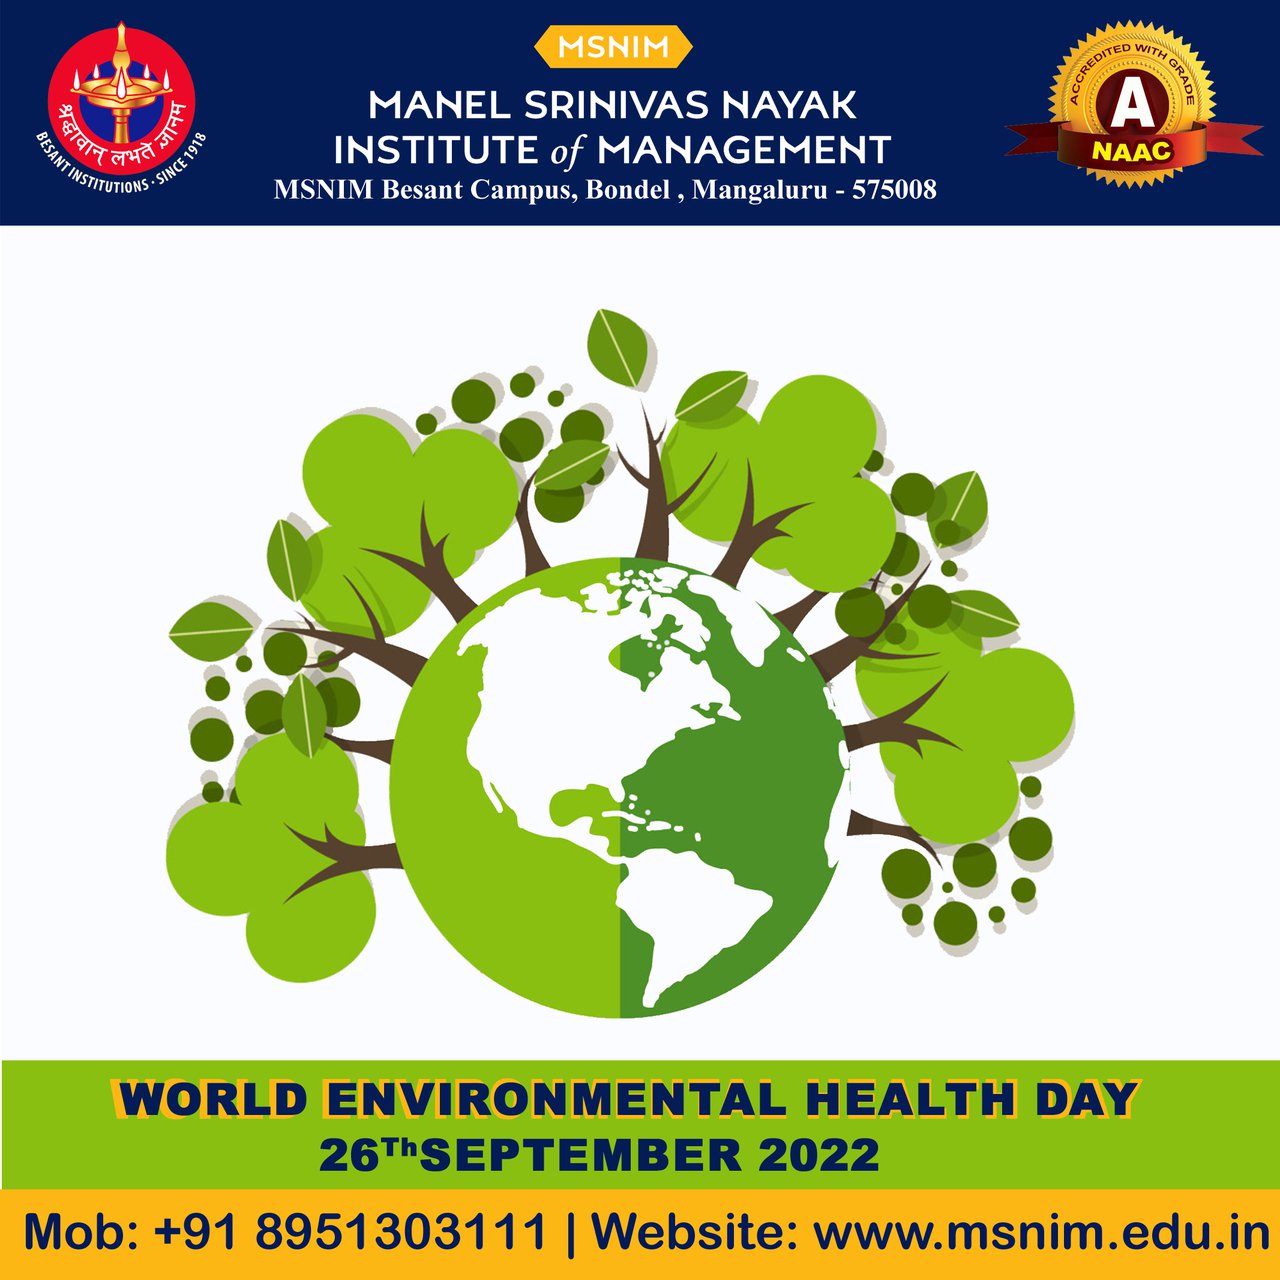 worl environmental health day